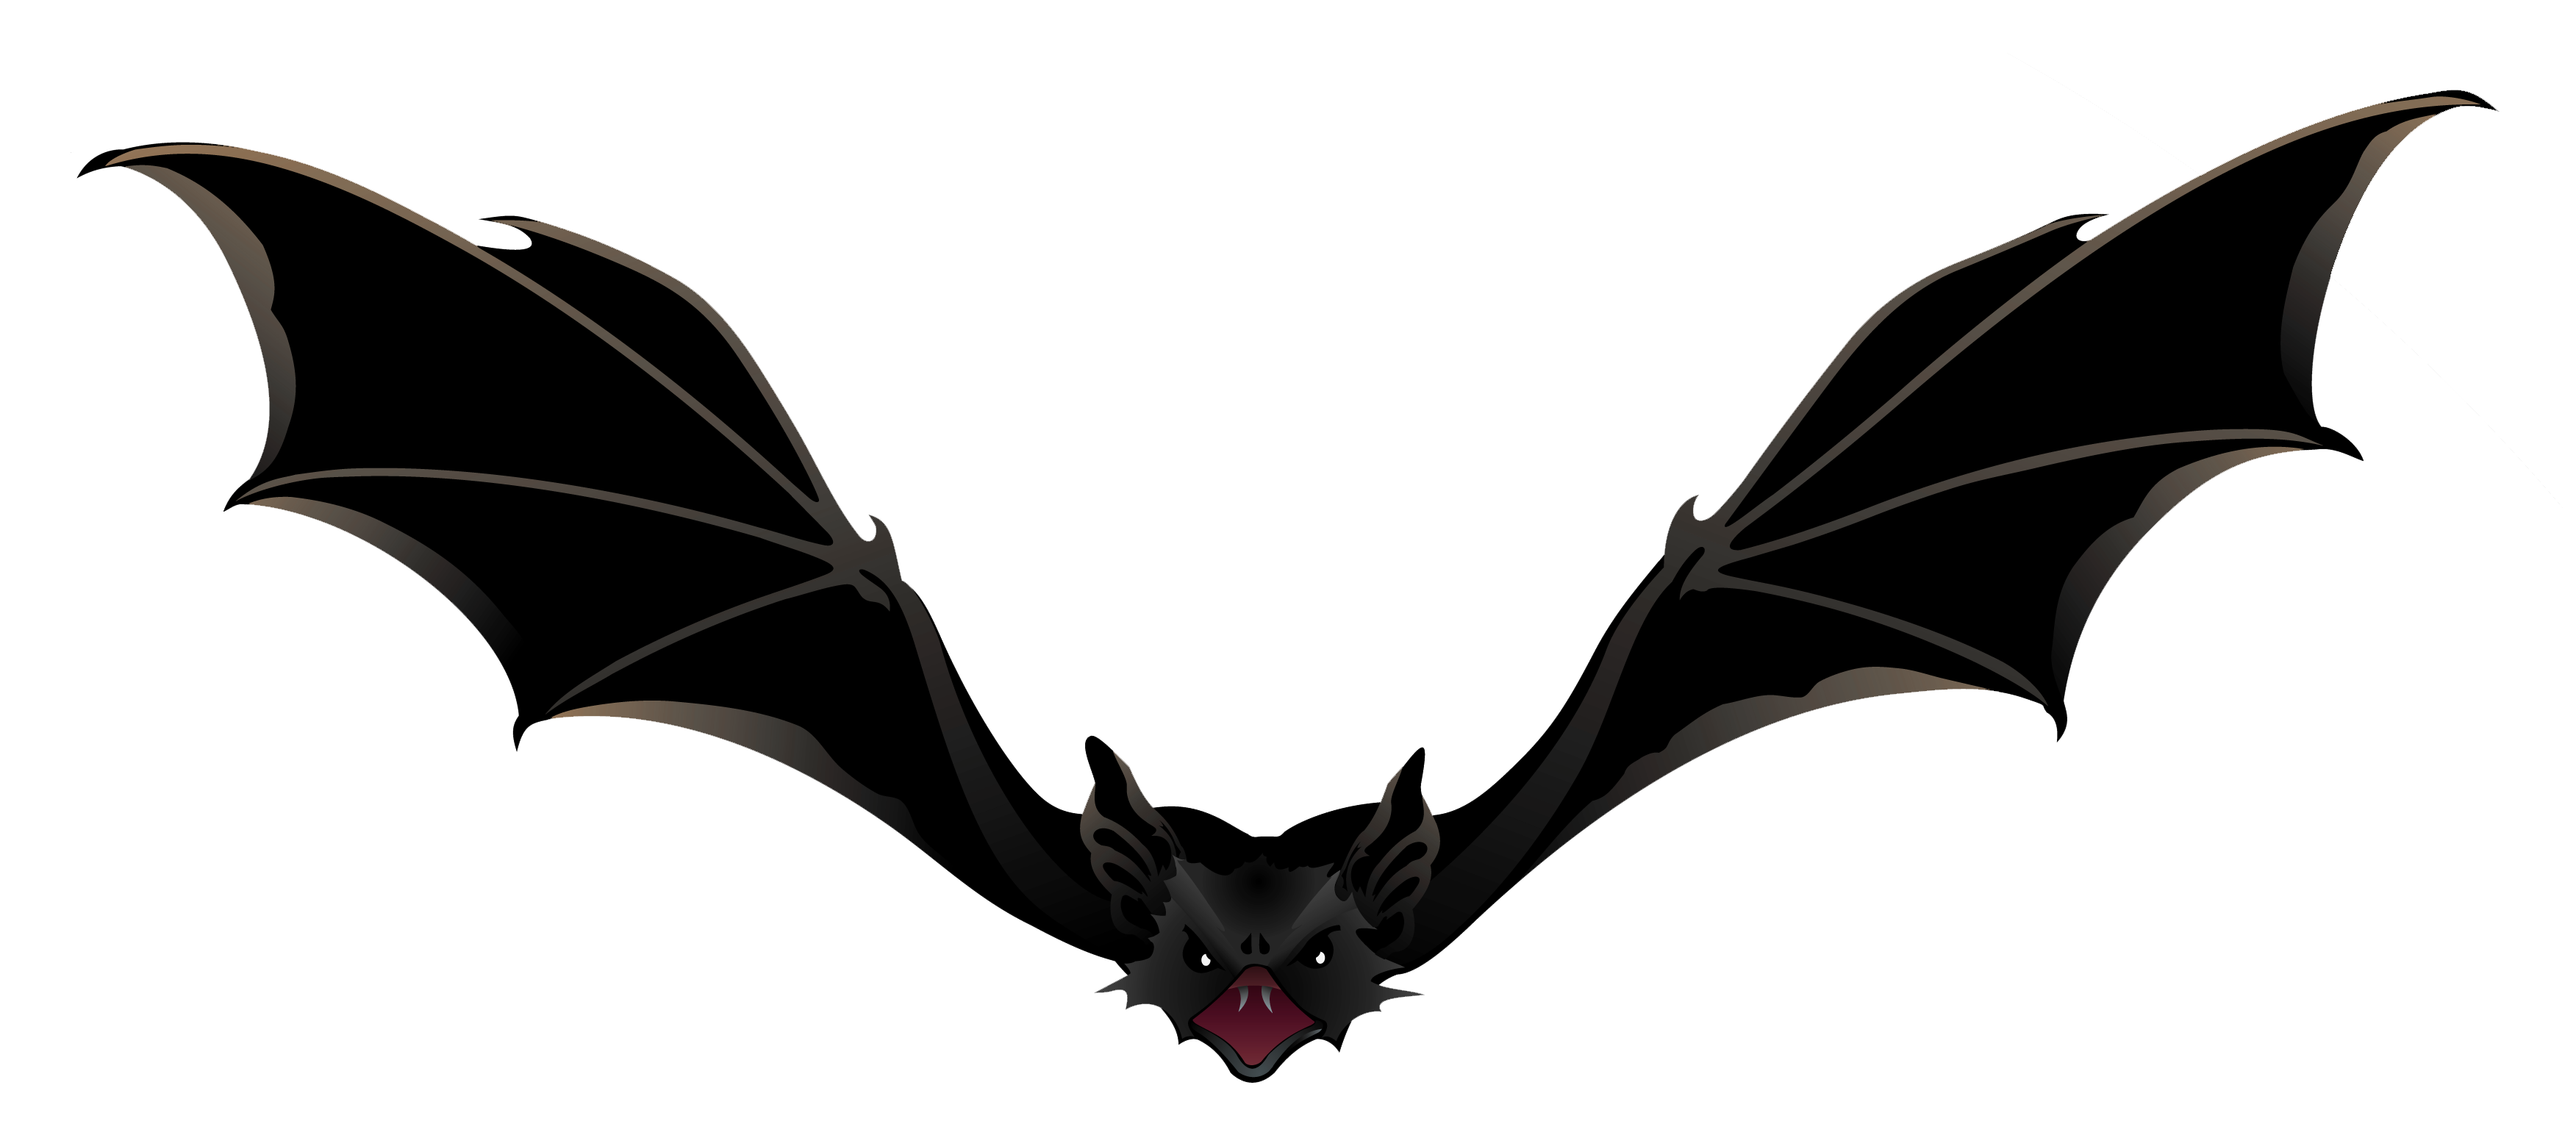 Bats clipart creepy. Bat png picture gallery